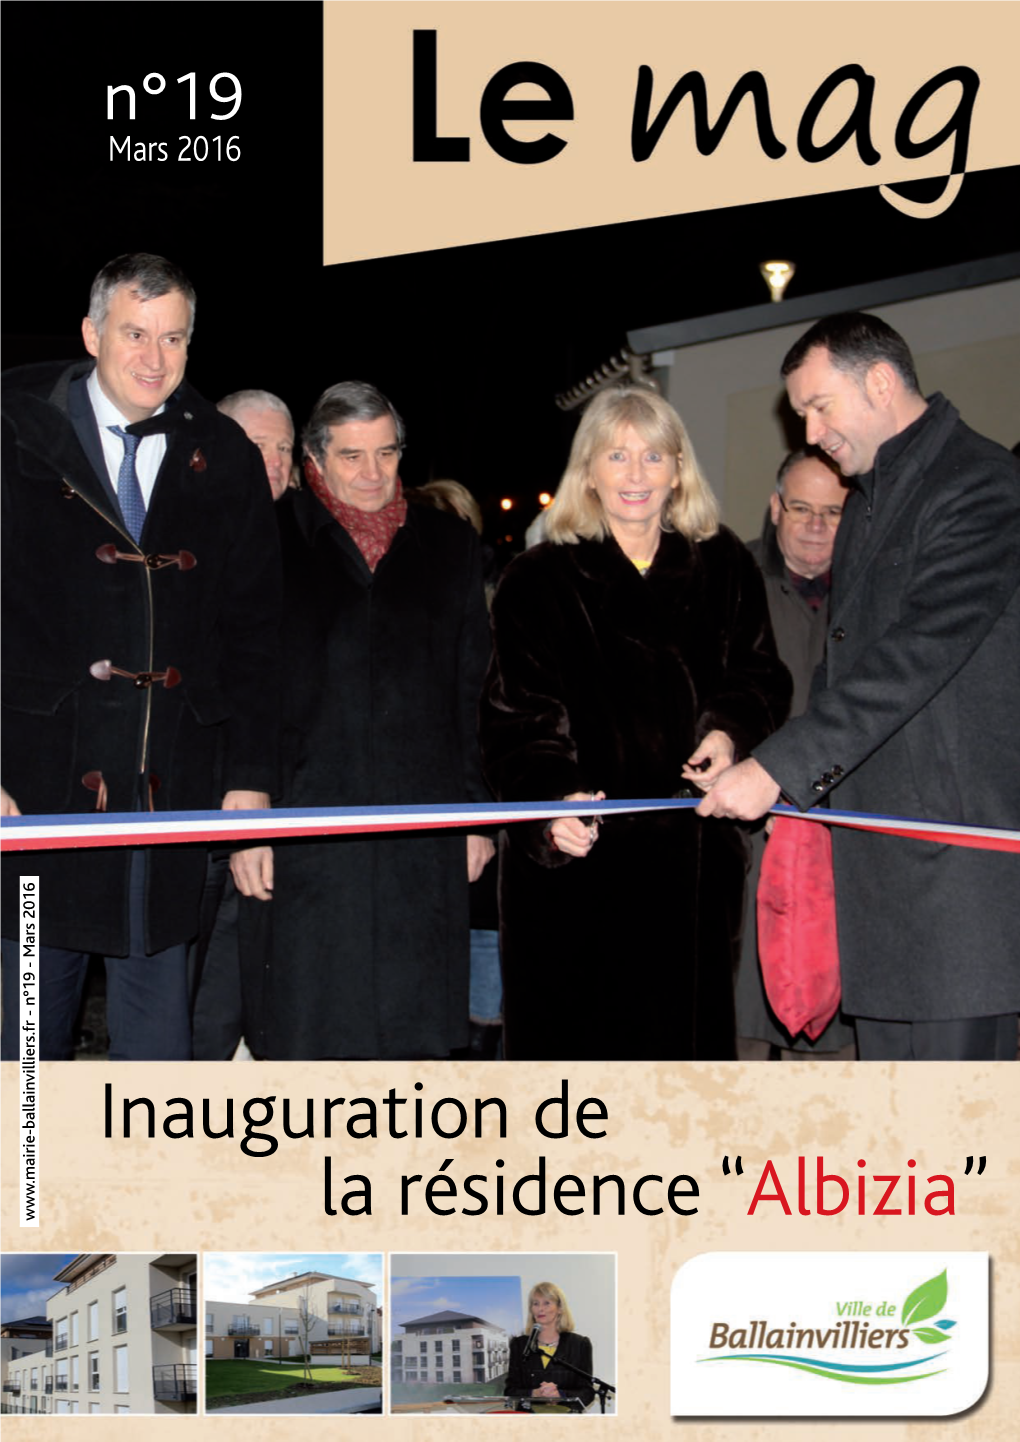 Inauguration De La Résidence “Albizia”